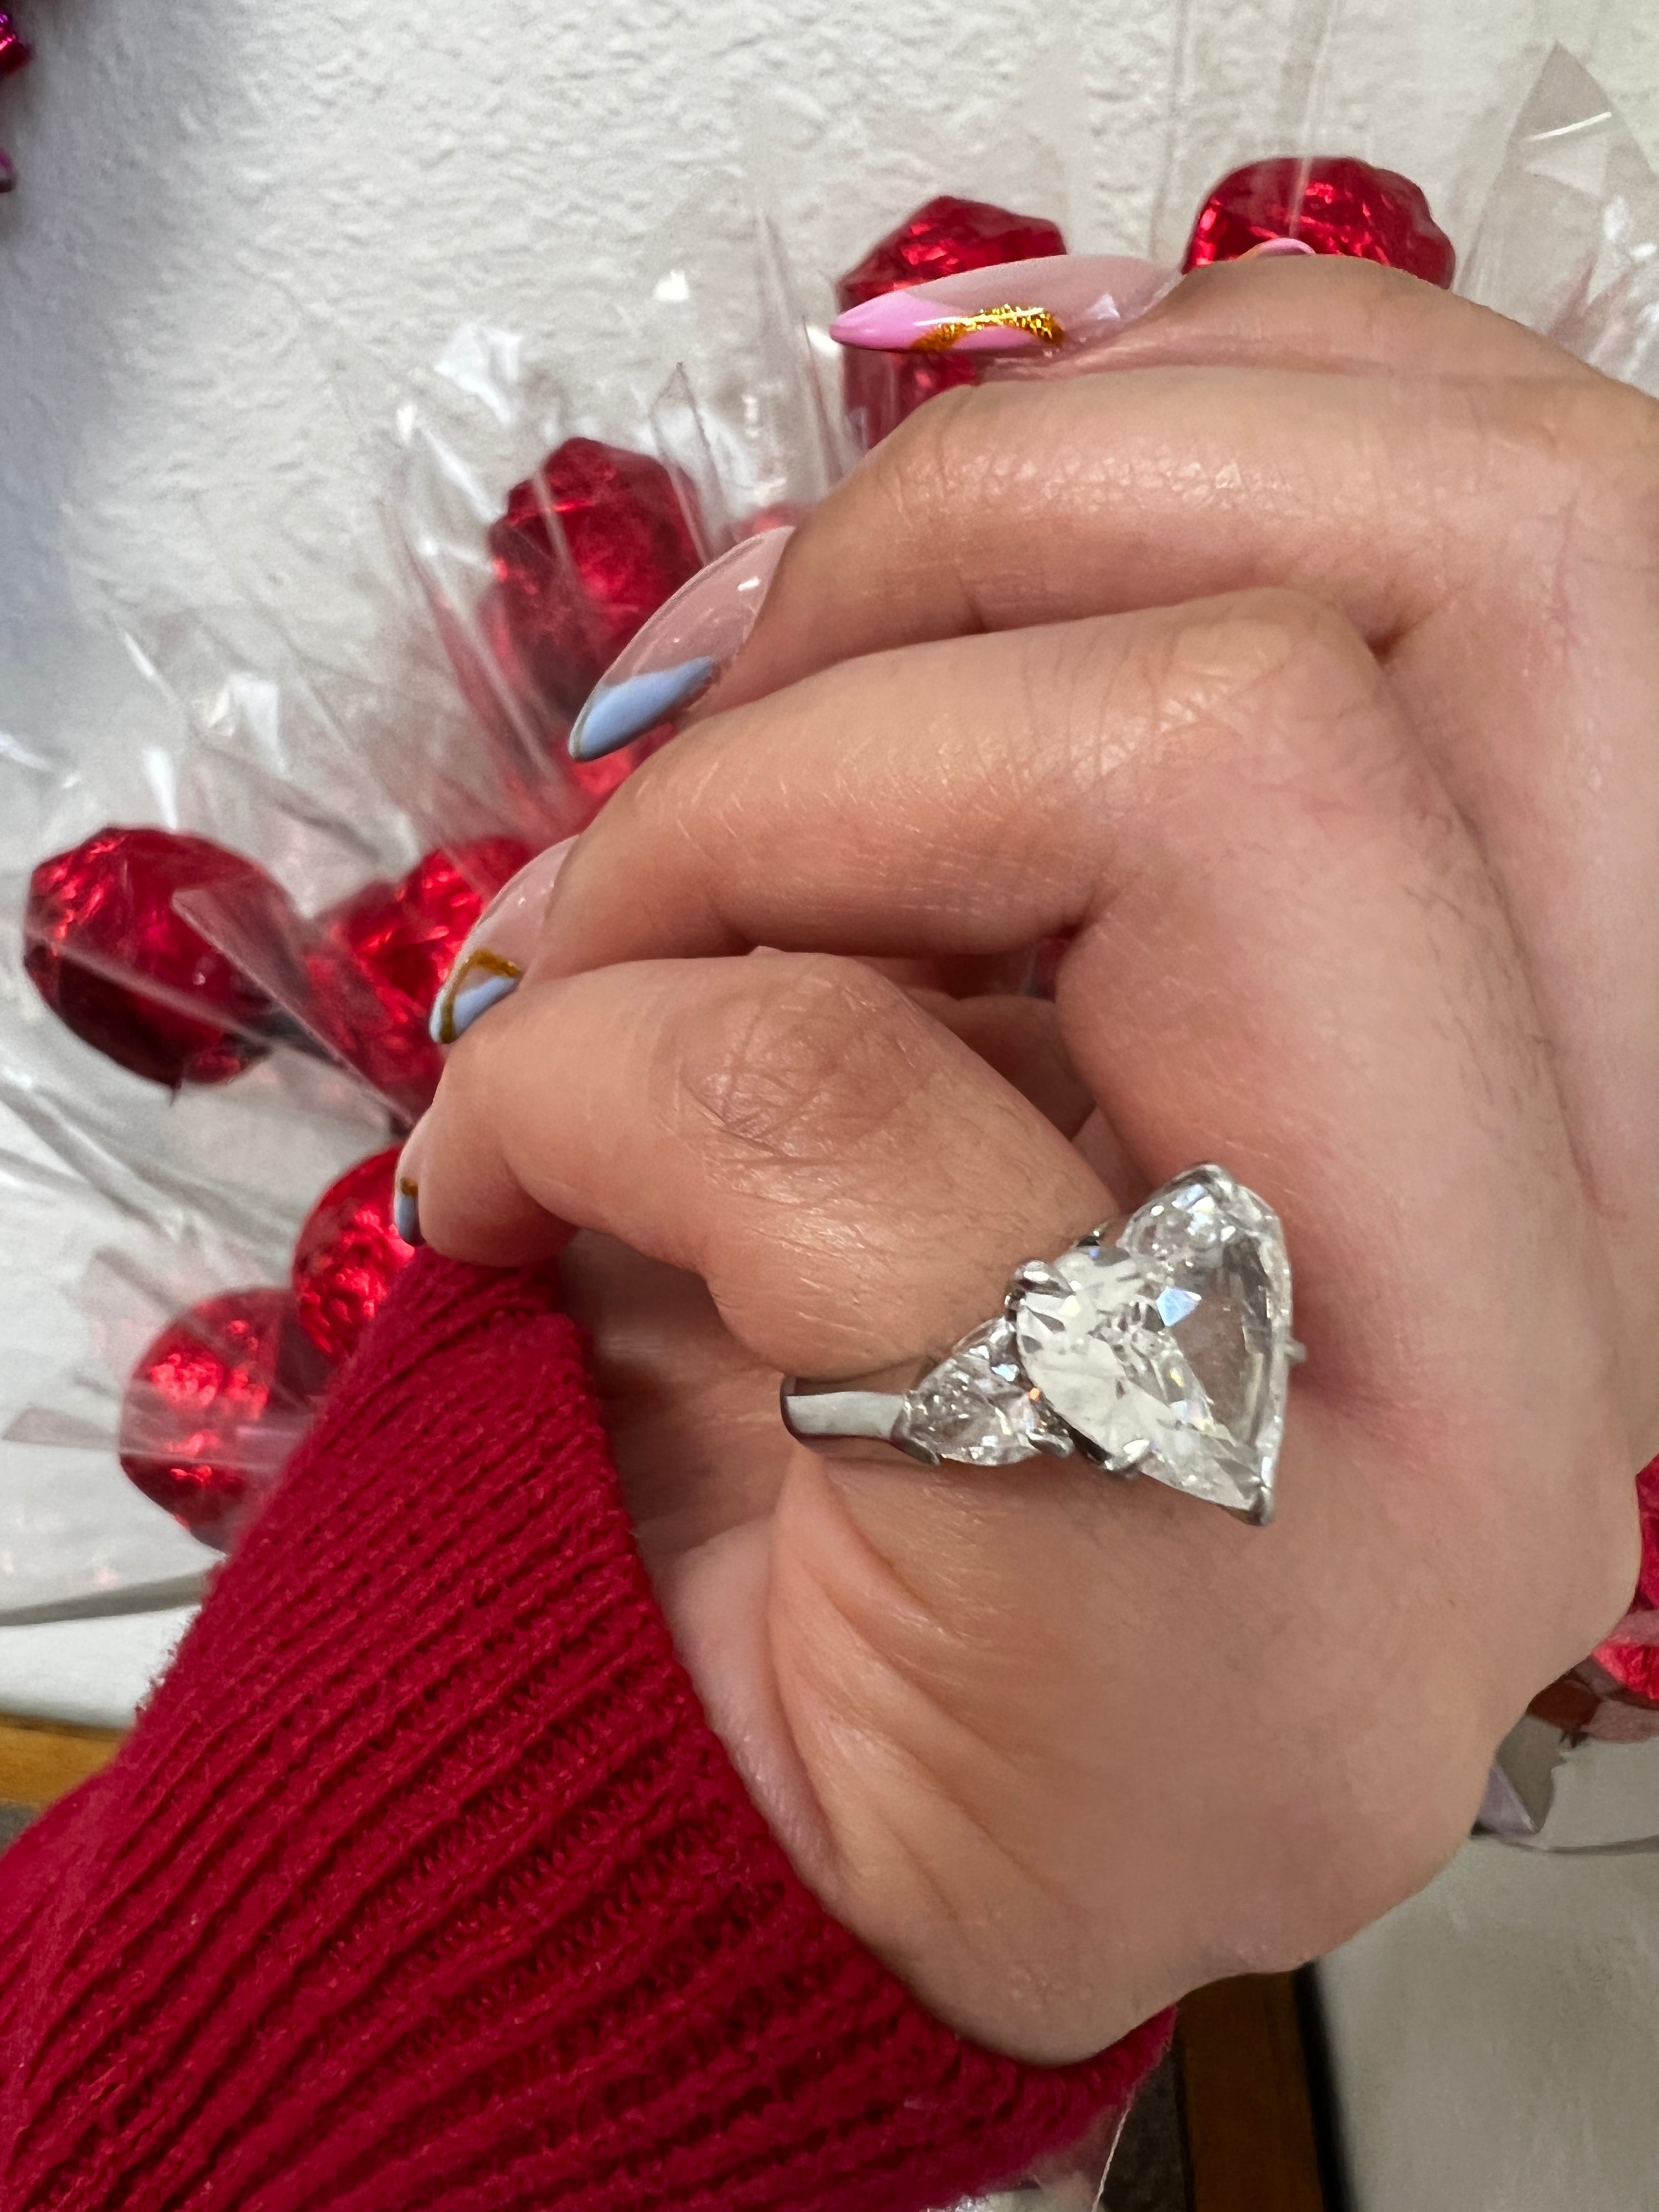 4.15 ct Heart Diamond Ring